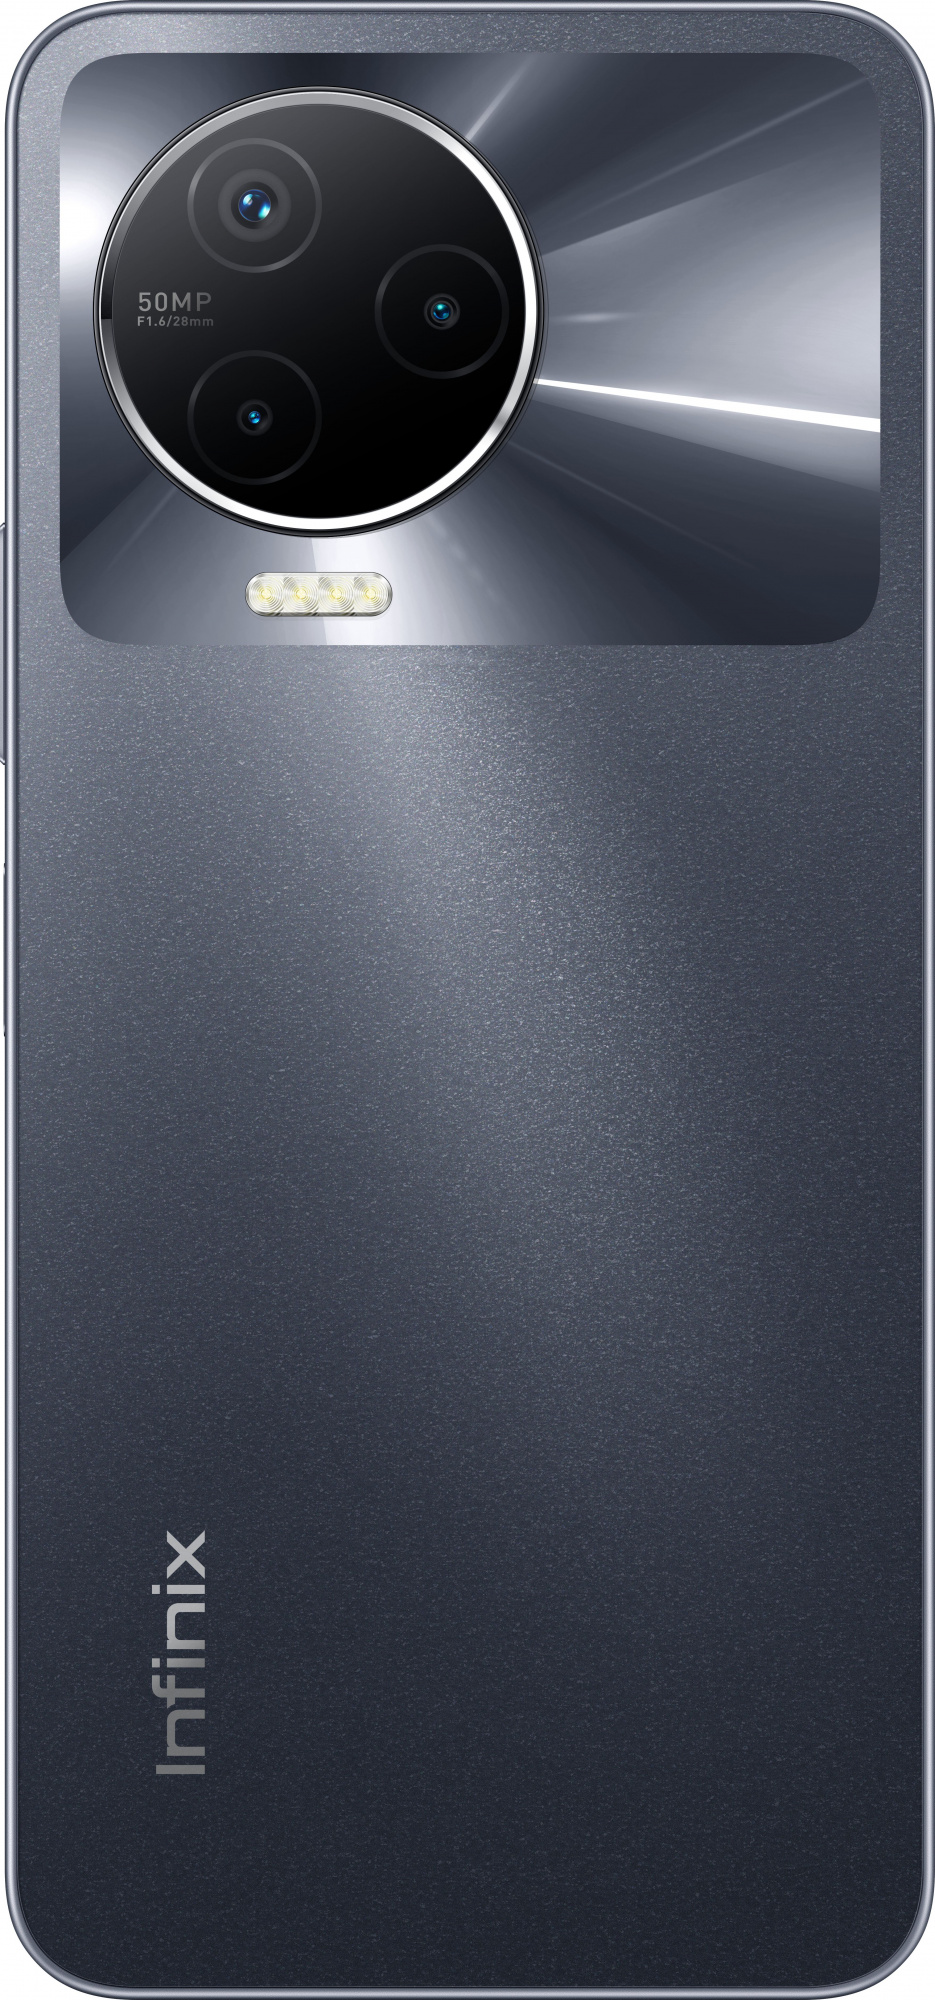 Смартфон Infinix X676C Note 12 2023 256Gb 8Gb FM серый моноблок 3G 4G 2Sim 6.7